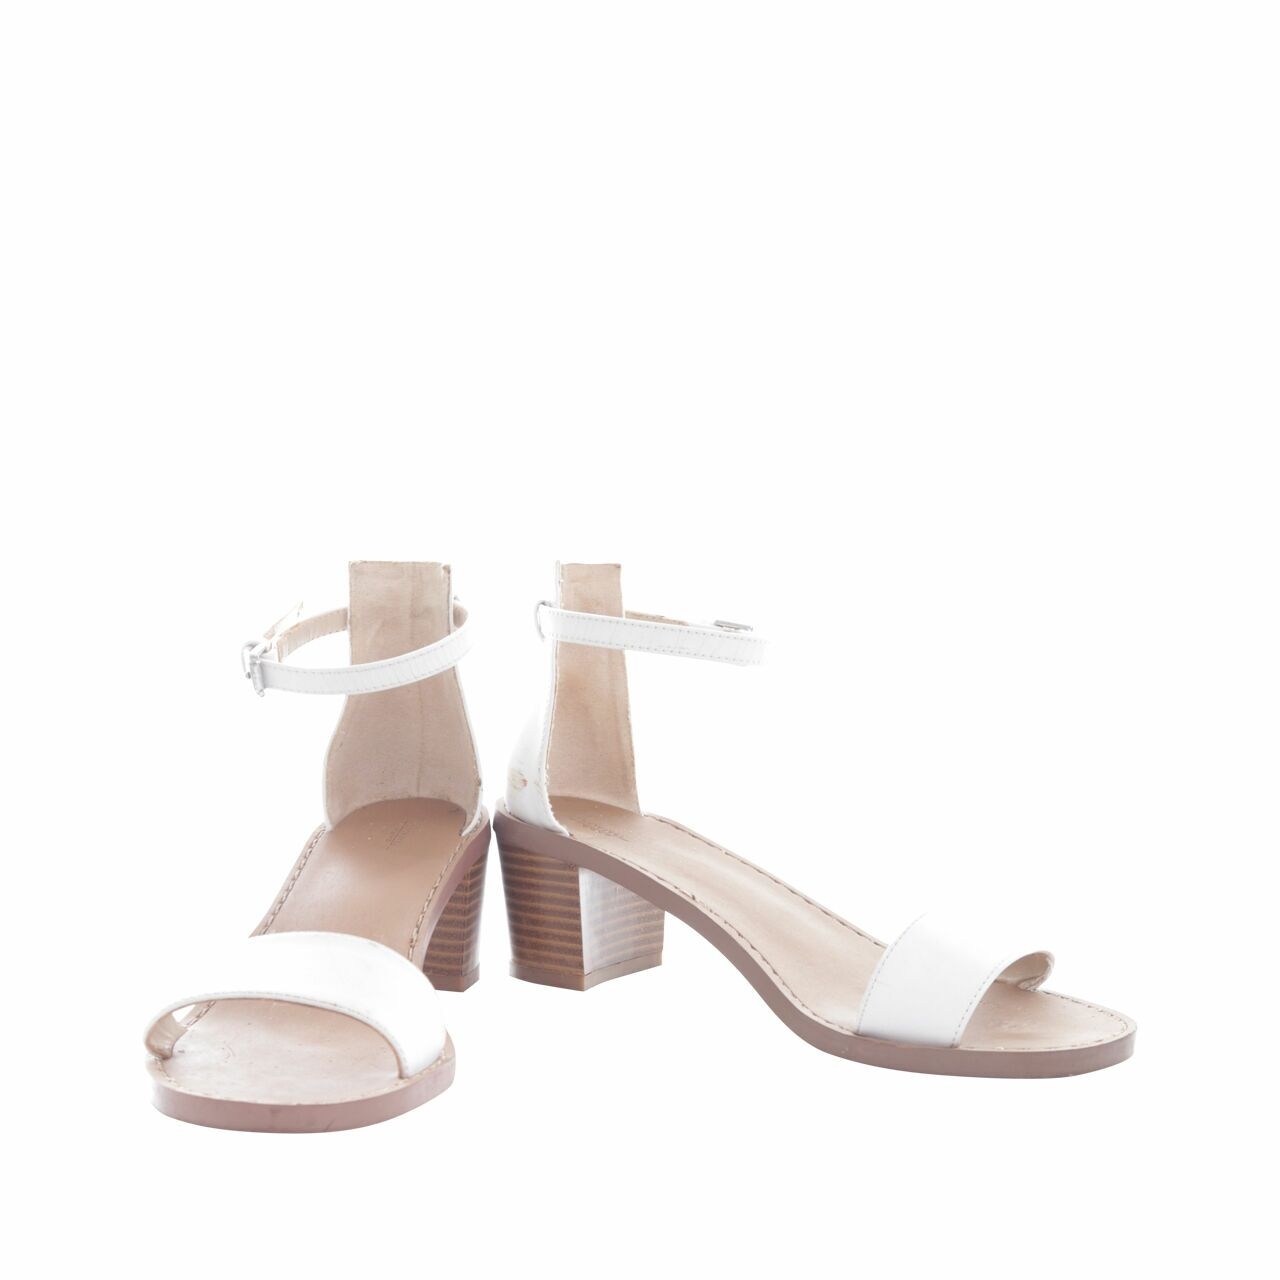 Zara White Heels